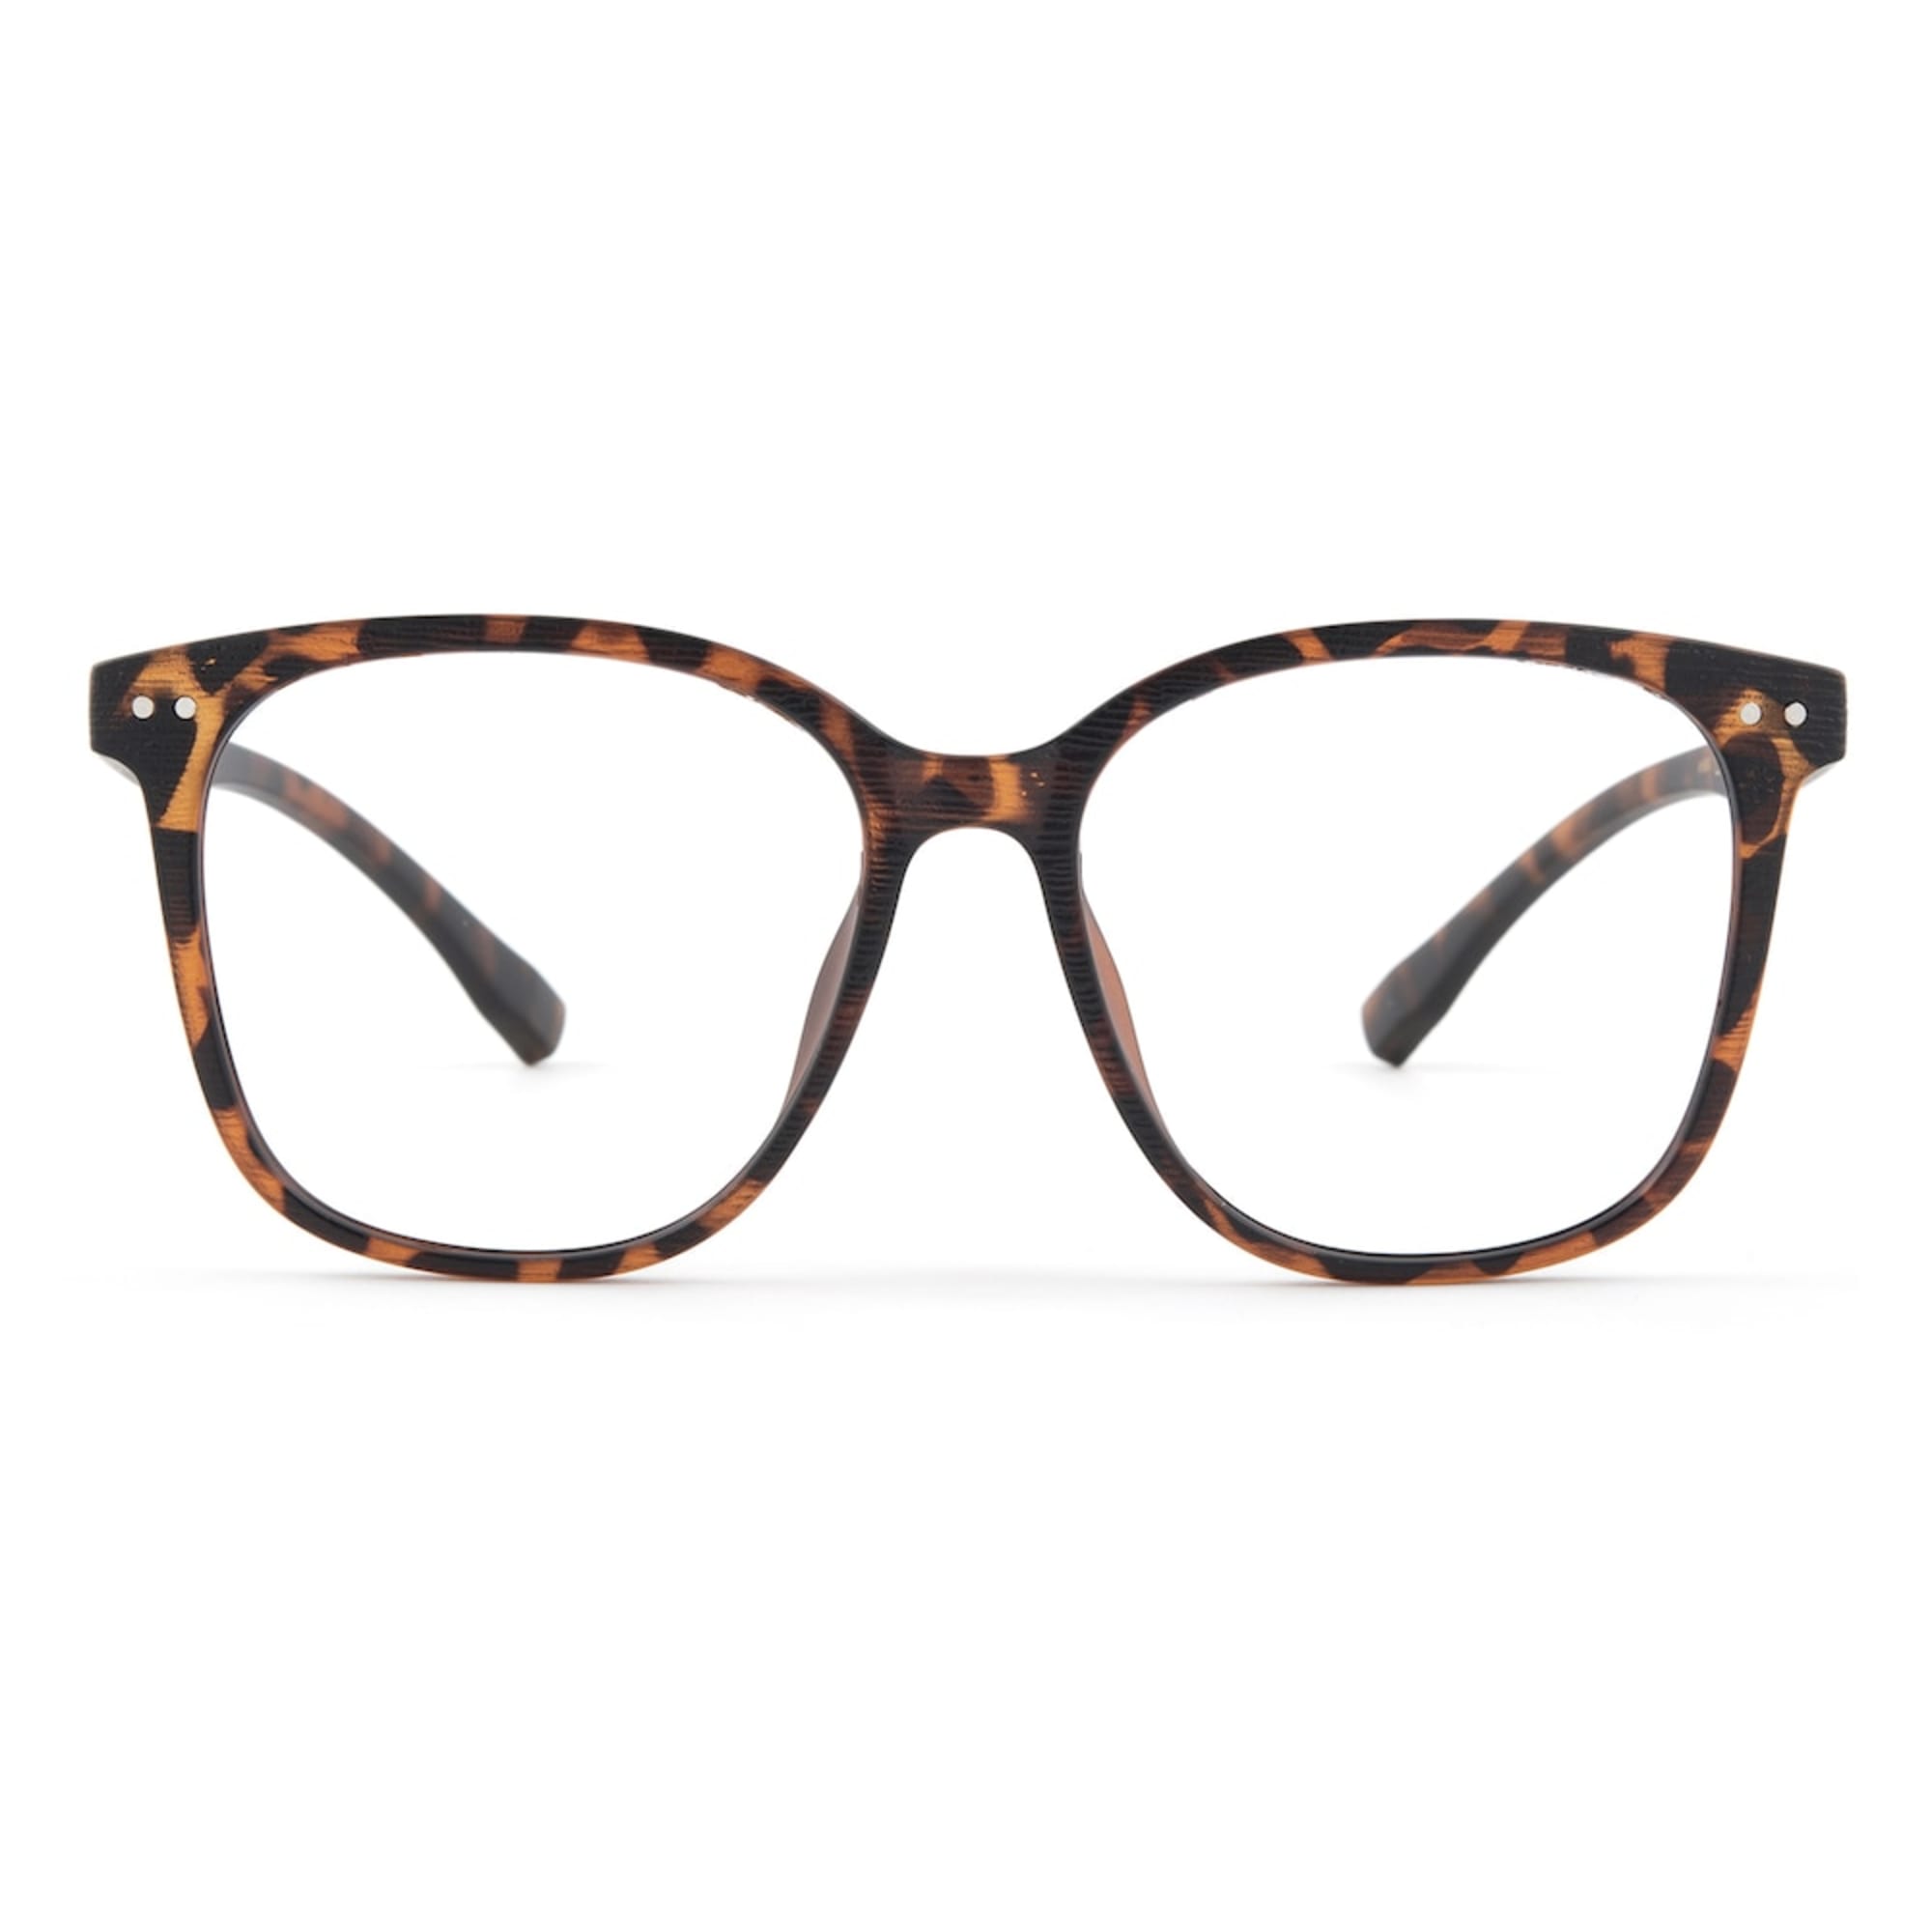 Square Glasses FV145